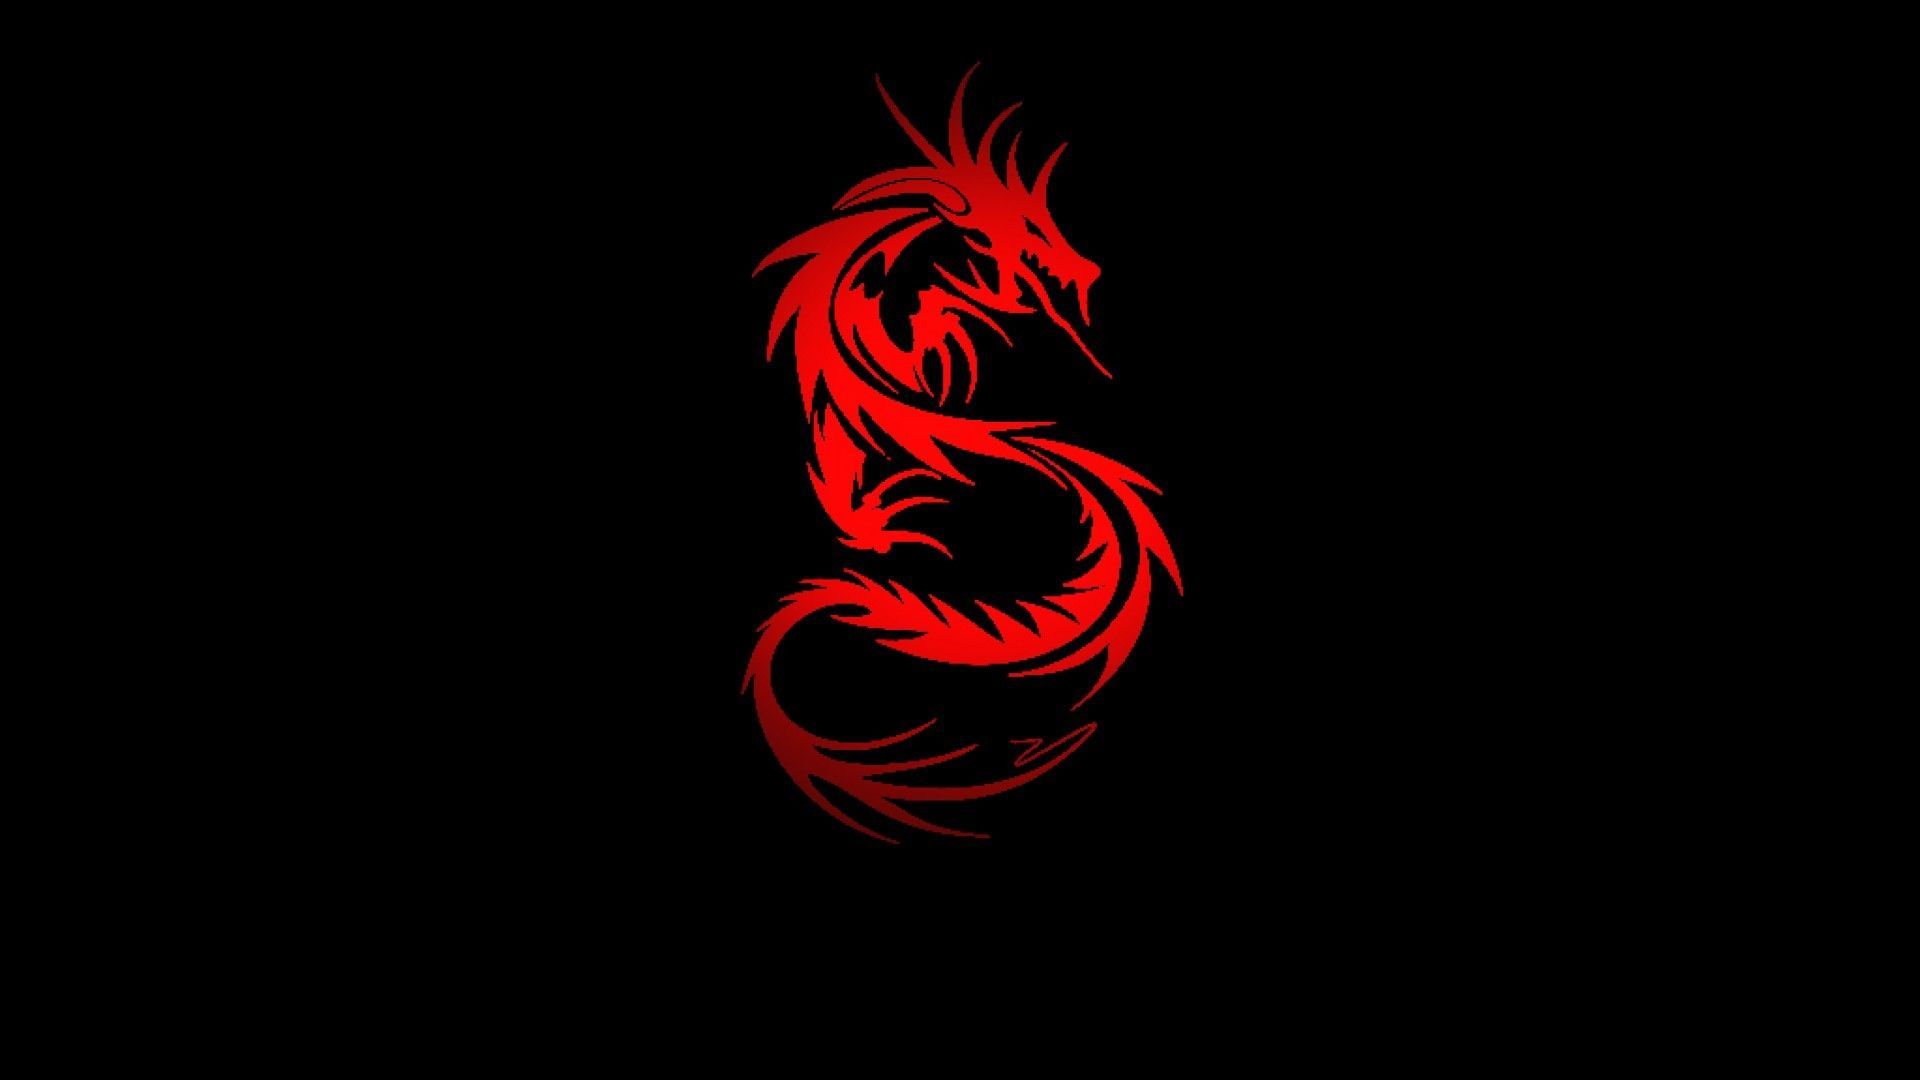 Red Dragon wallpaper HD free. Red dragon